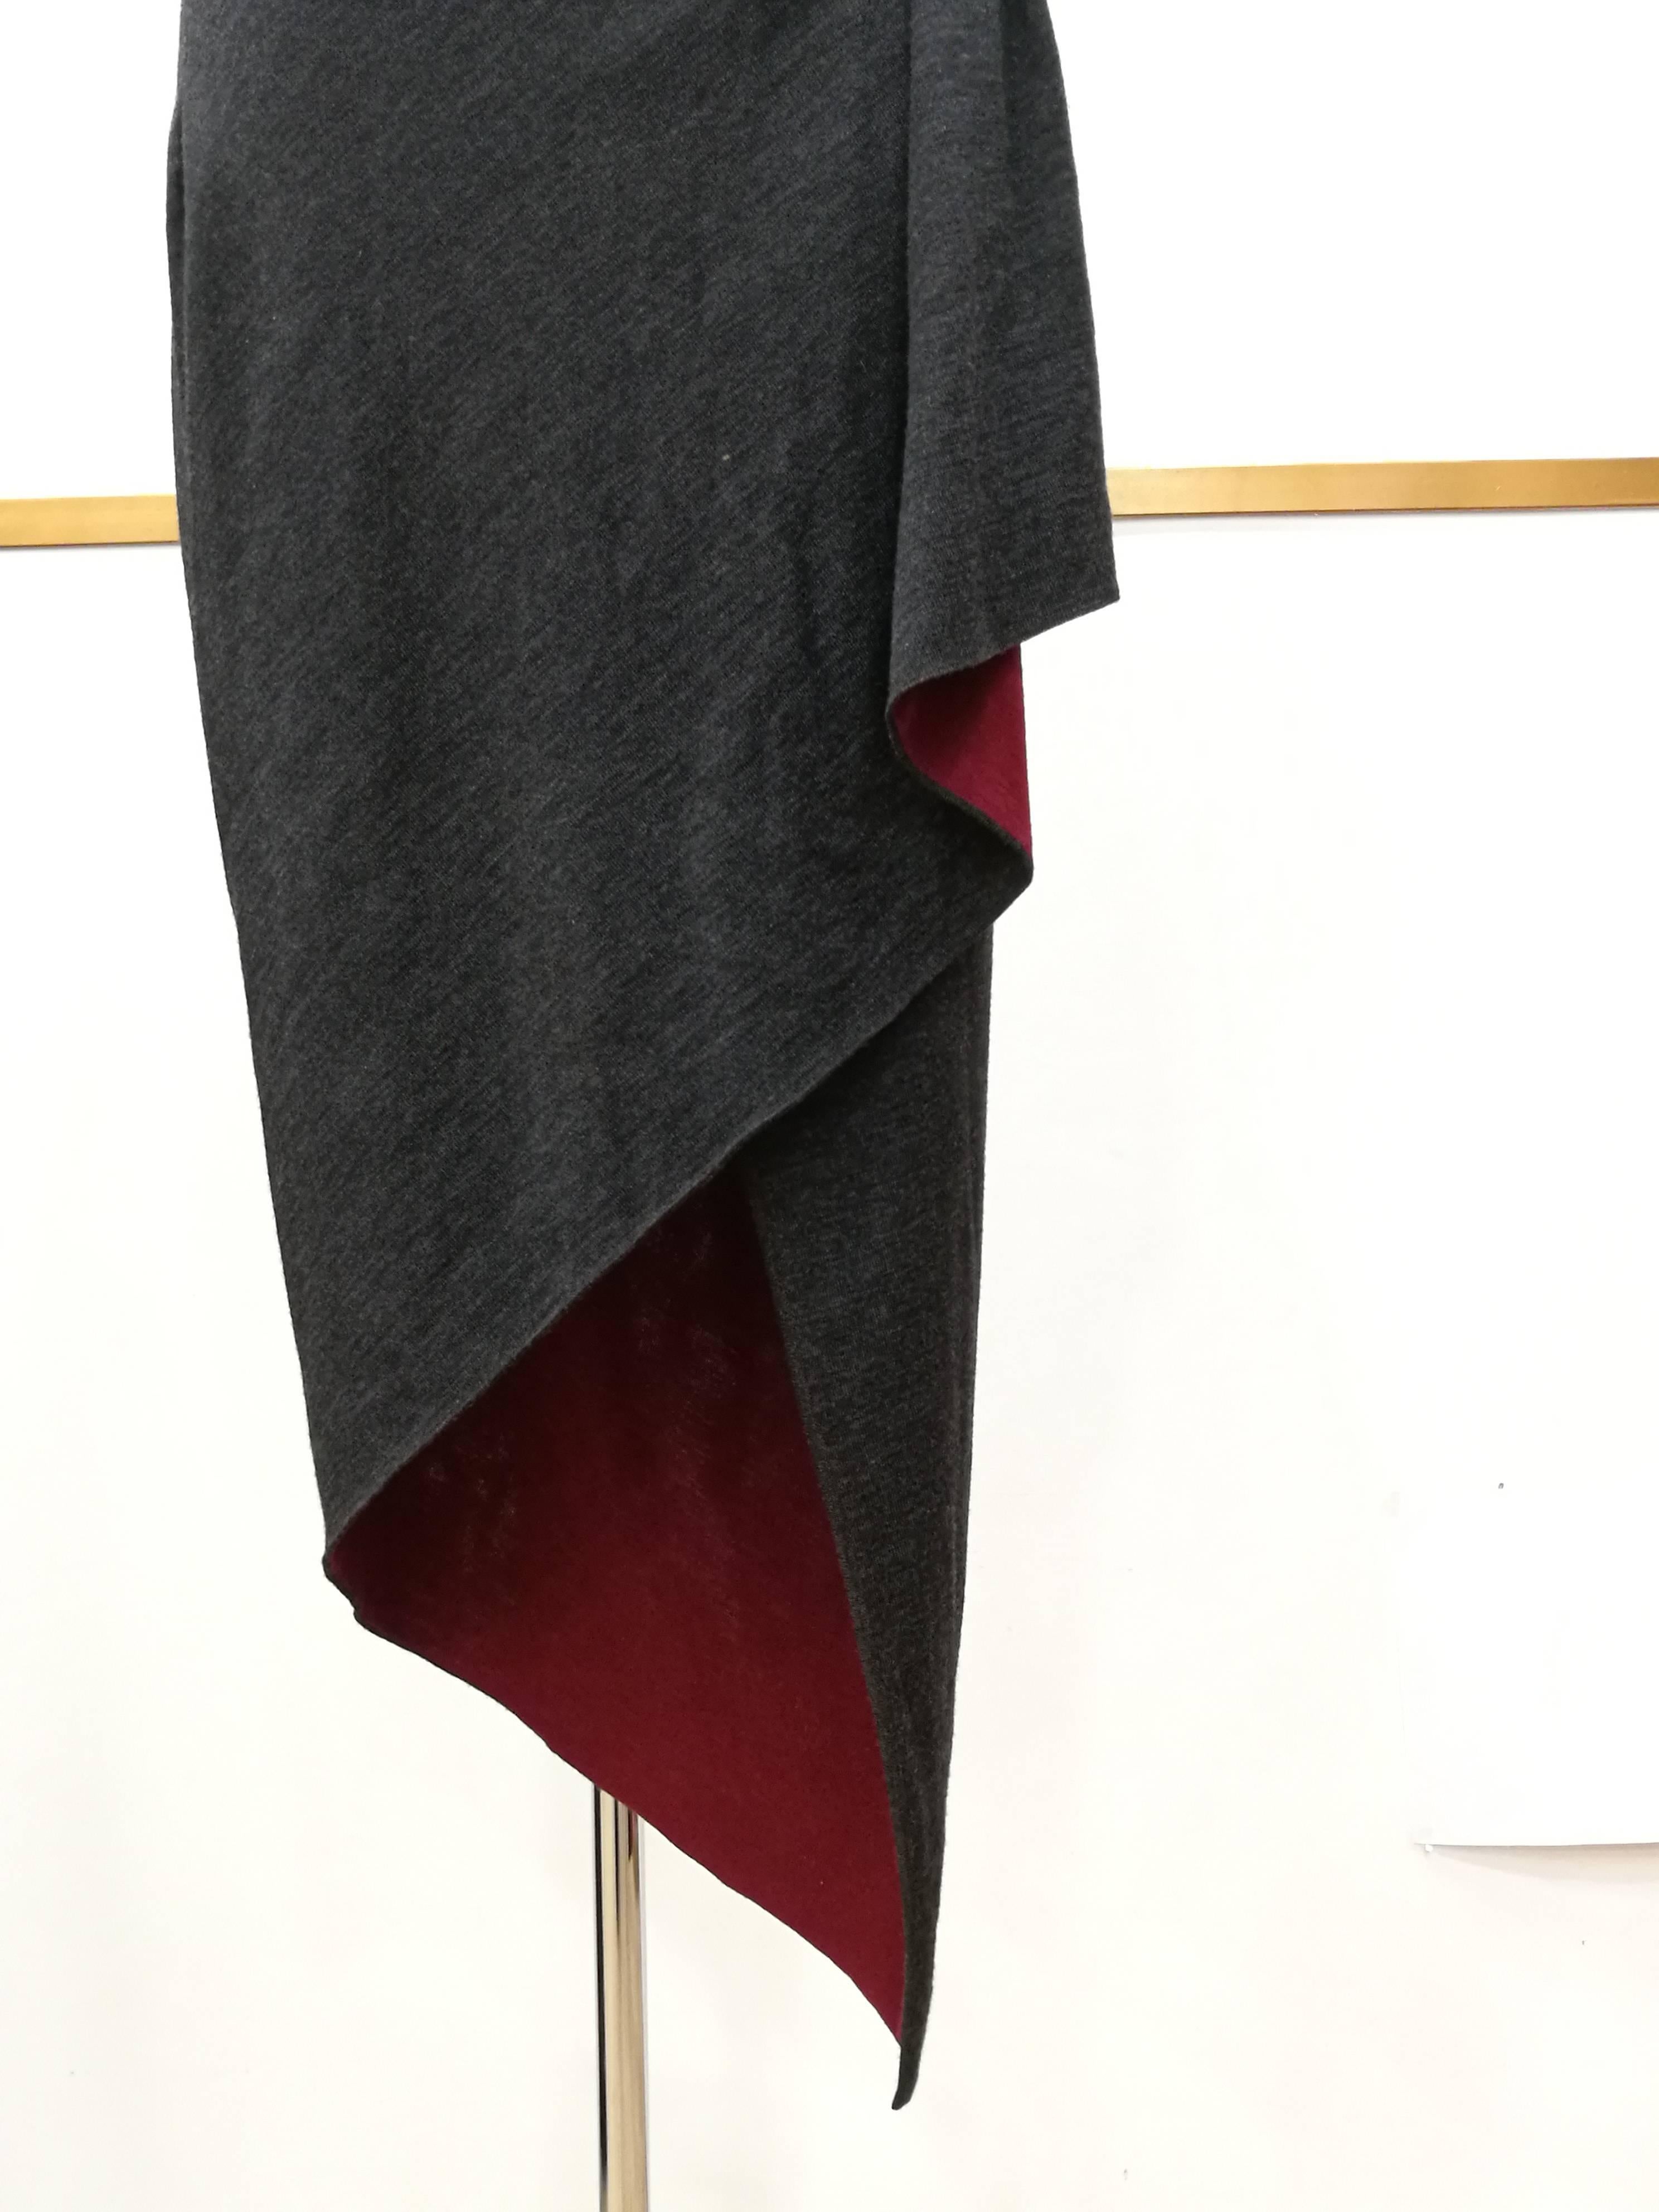 Emanuel Ungaro Parallele Grey Bordeaux Wool Skirt

